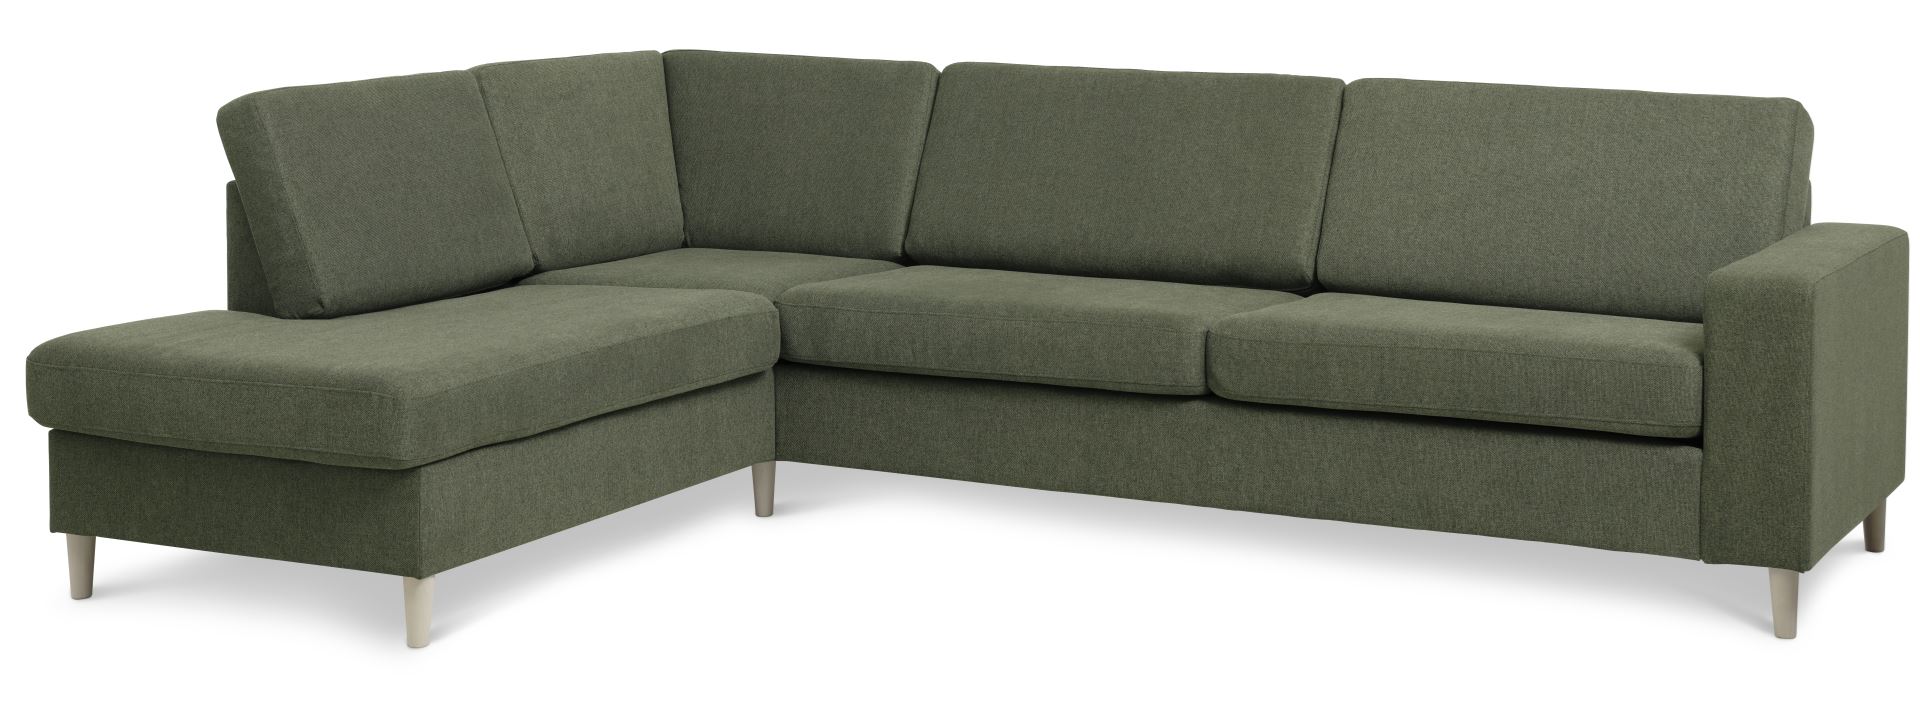 Pan set 2 OE left sofa med chaiselong - vinter mosgrøn polyester stof og natur træ